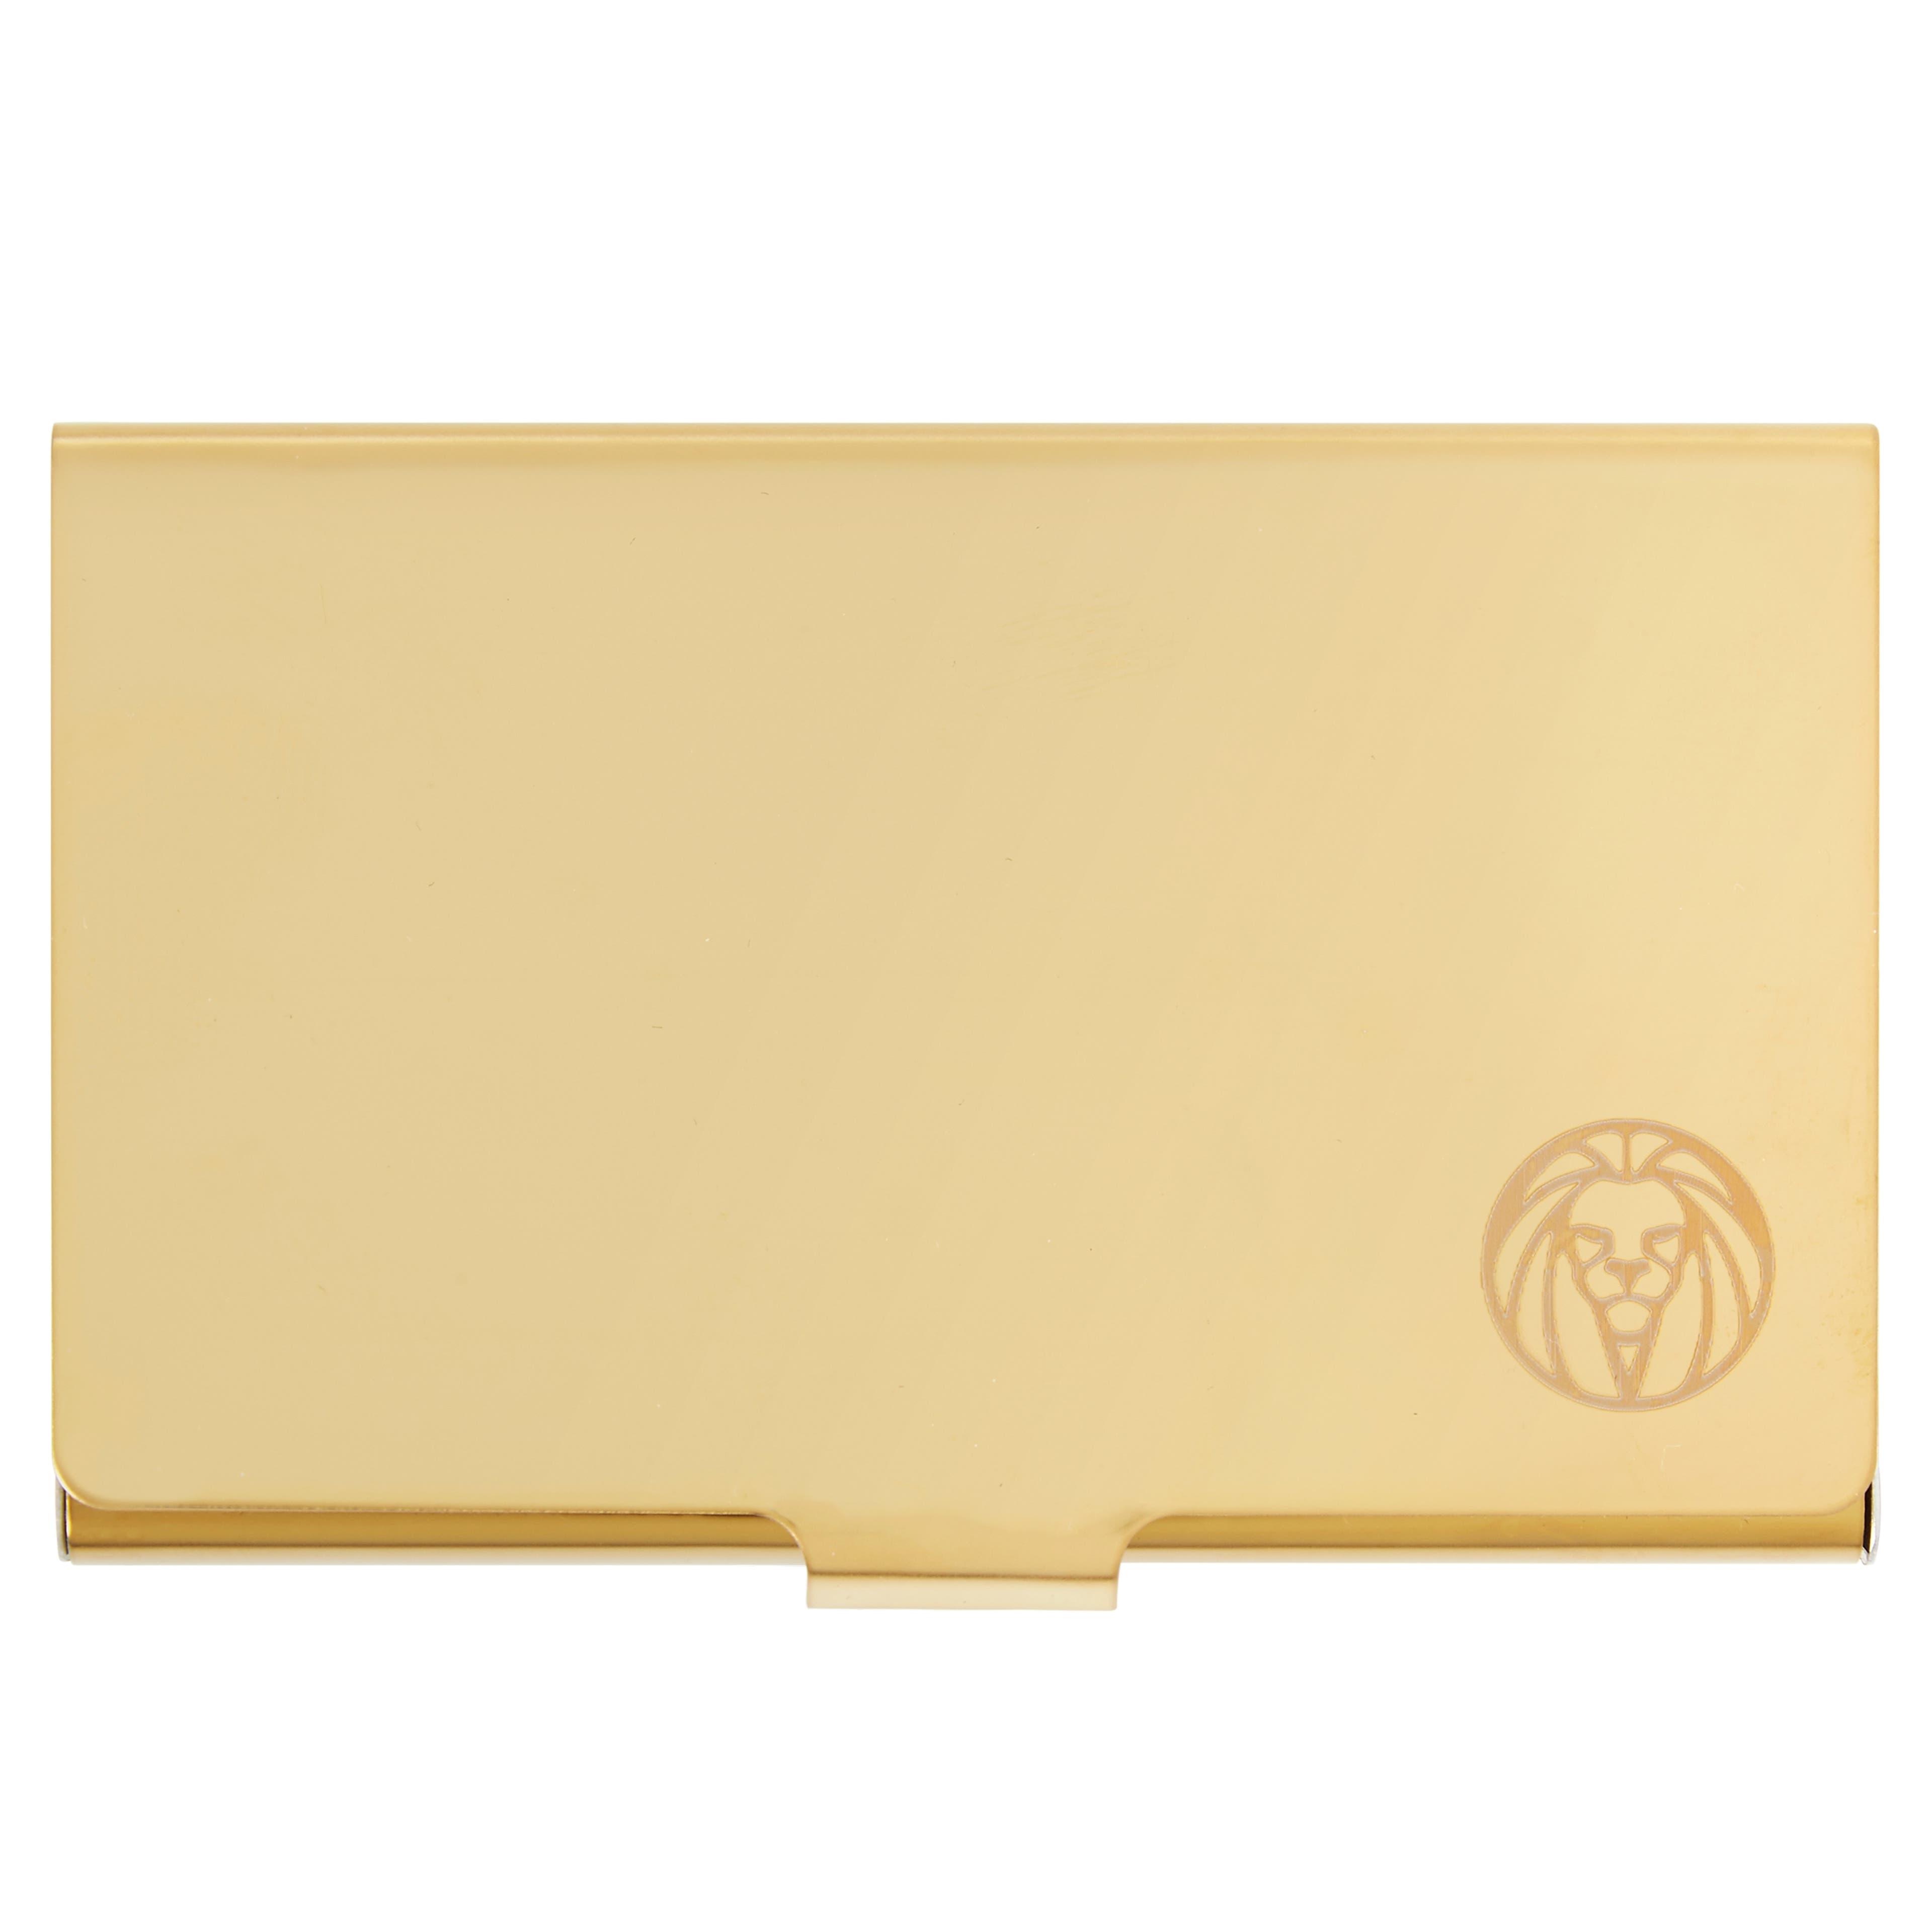 Gold-Tone Card Holder